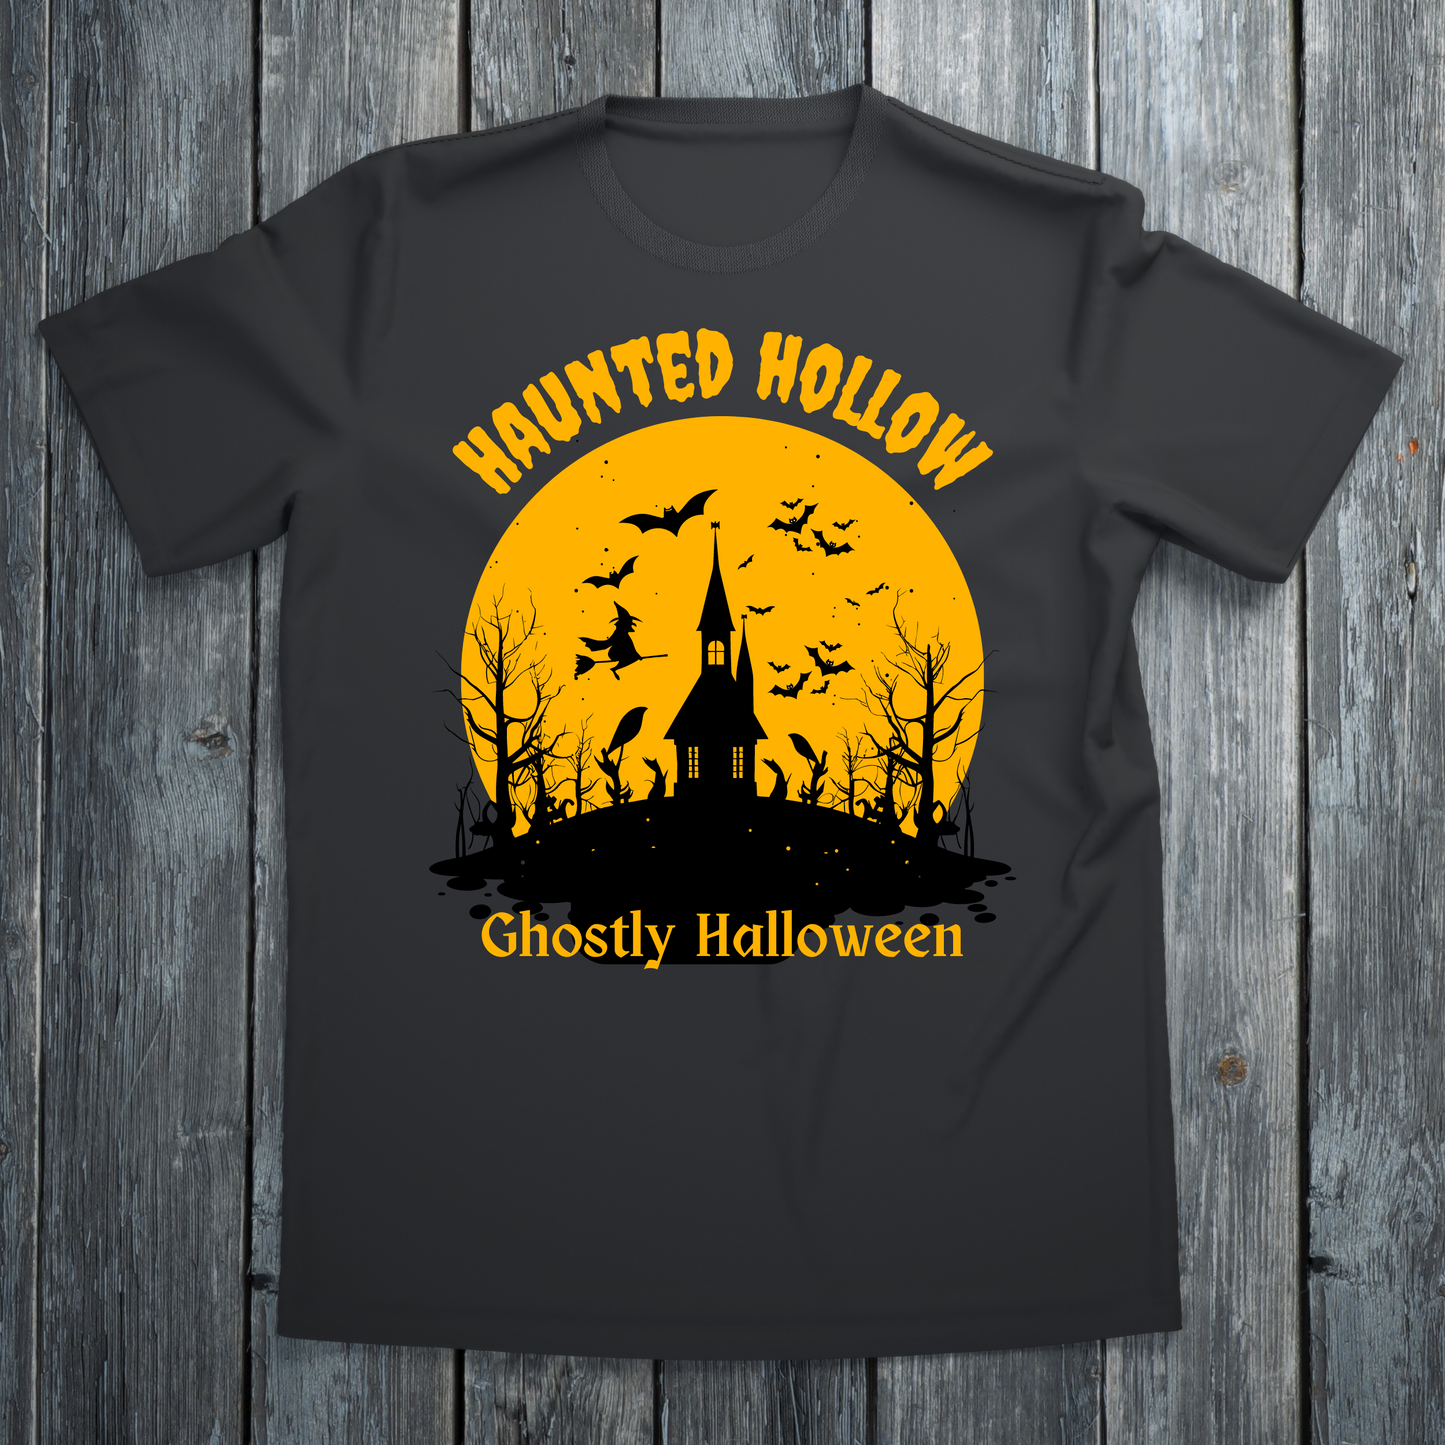 Haunted Hollow - Men's halloween shirt - Premium t-shirt from Lees Krazy Teez - Just $21.95! Shop now at Lees Krazy Teez